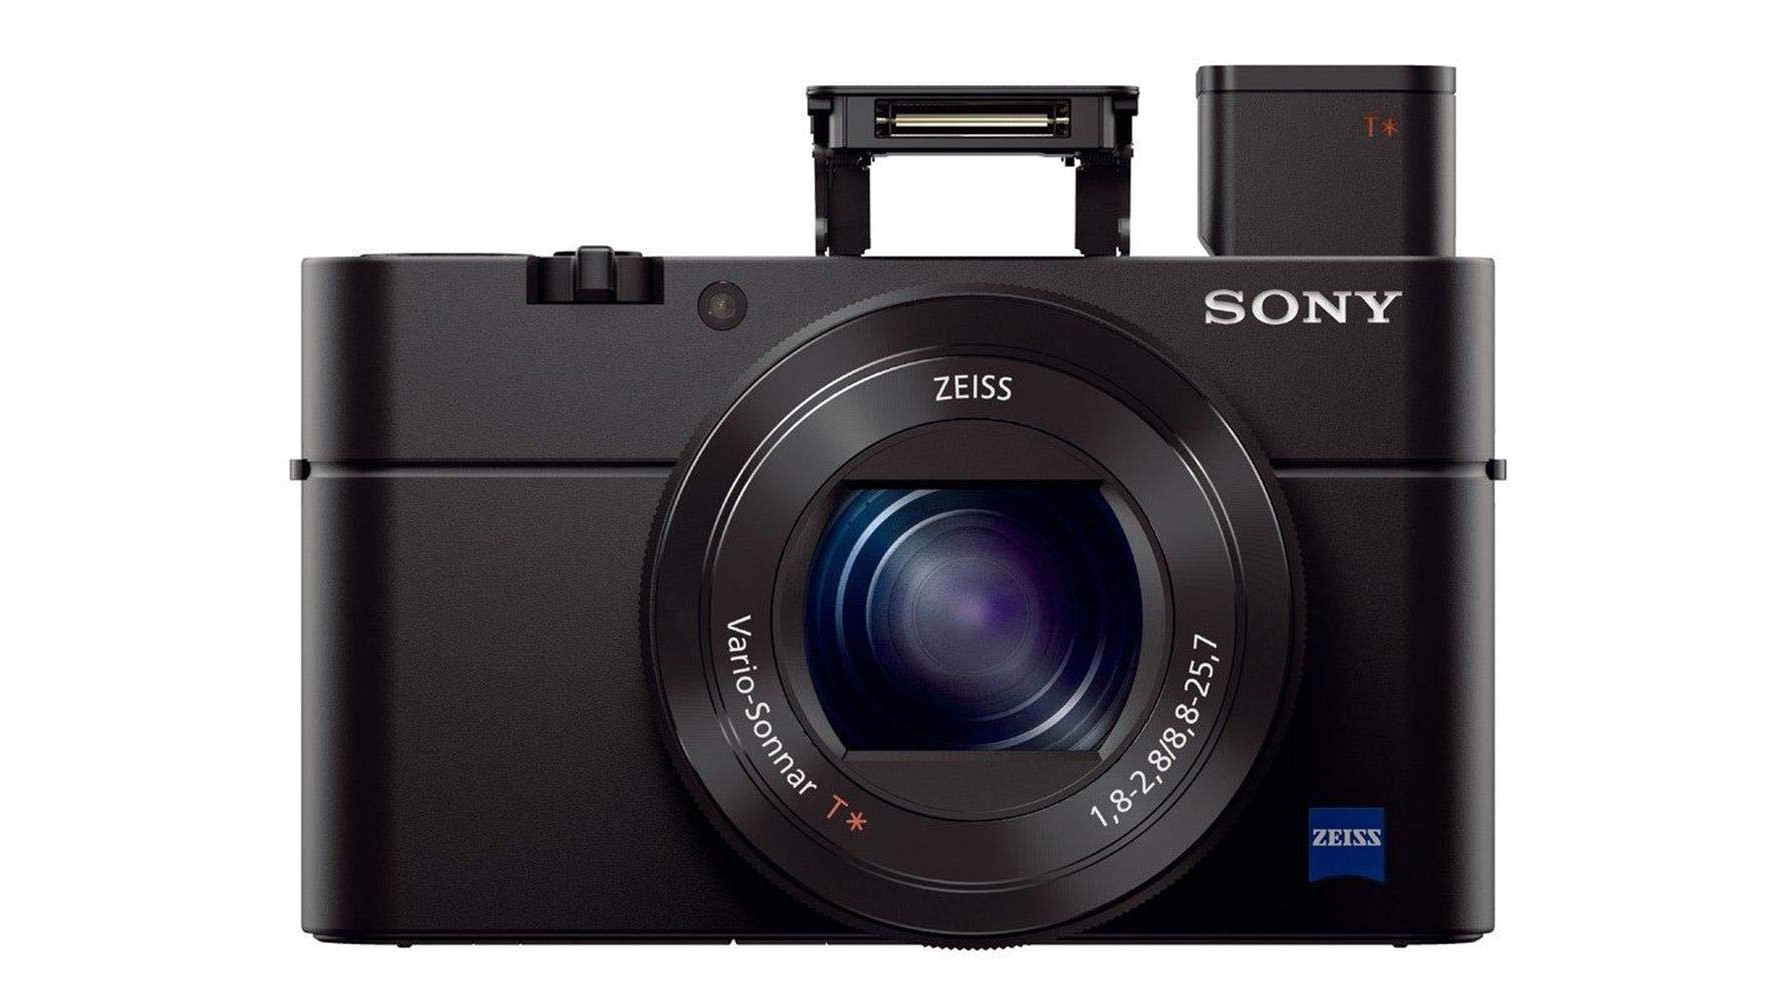 Sony RX100 III camera